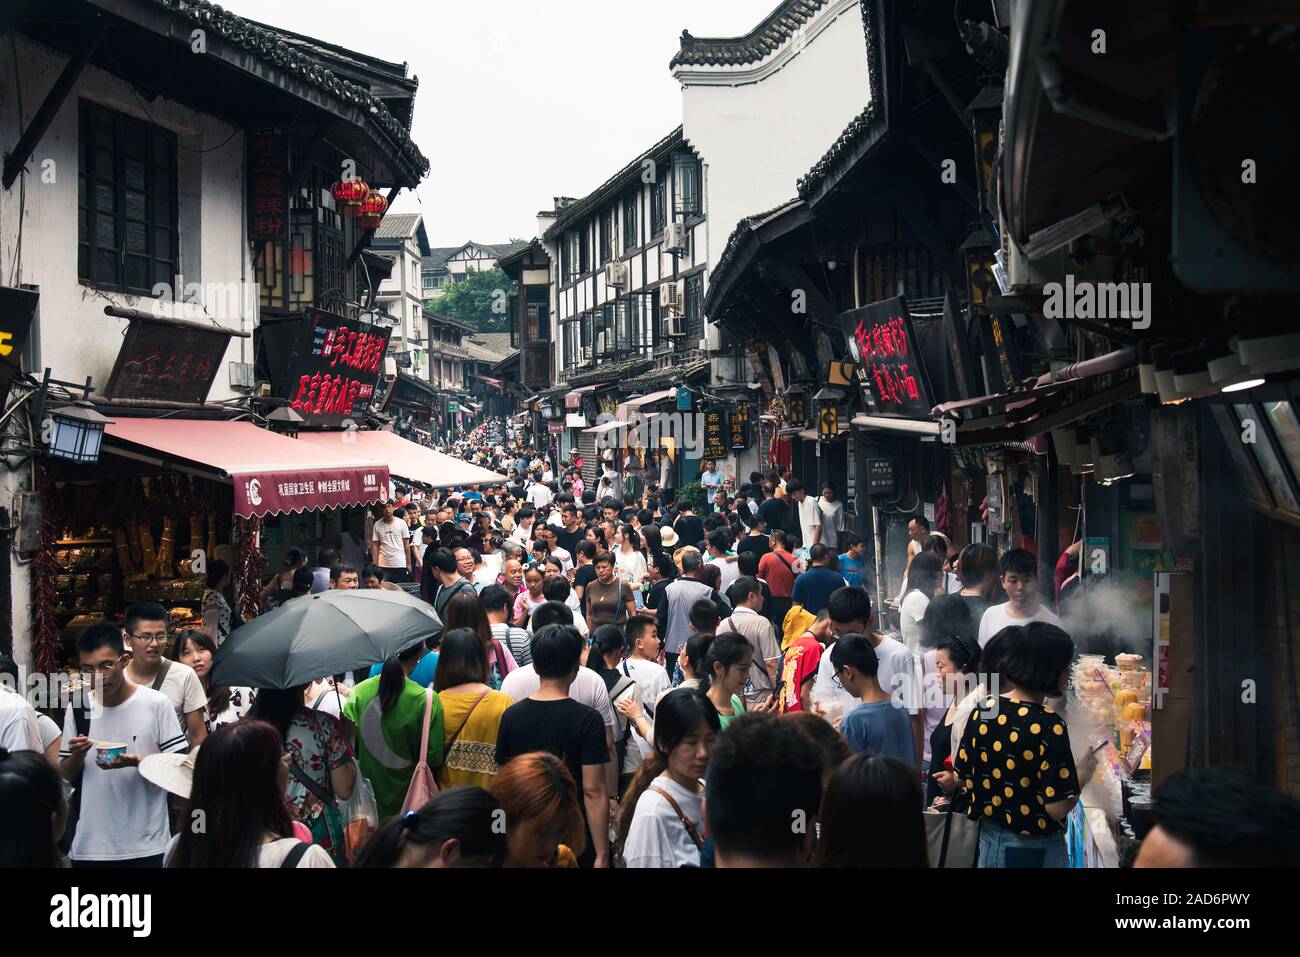 Chongqing, China - July 24, 2019: Crowded Ciqikou ancient town in the Shapingba District of Chongqing Municipality of People's Republic of China Stock Photo